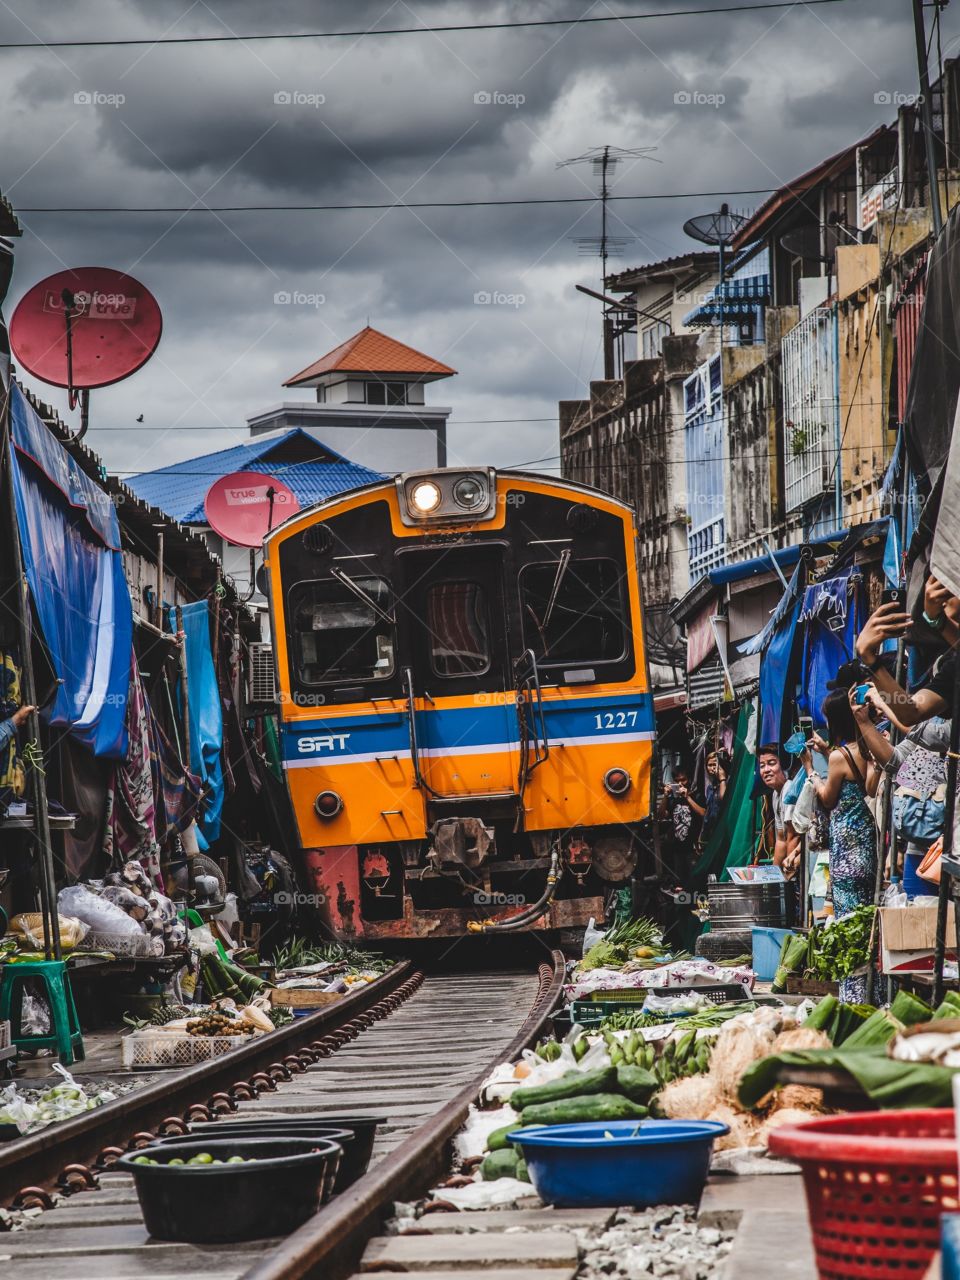 The train through the market